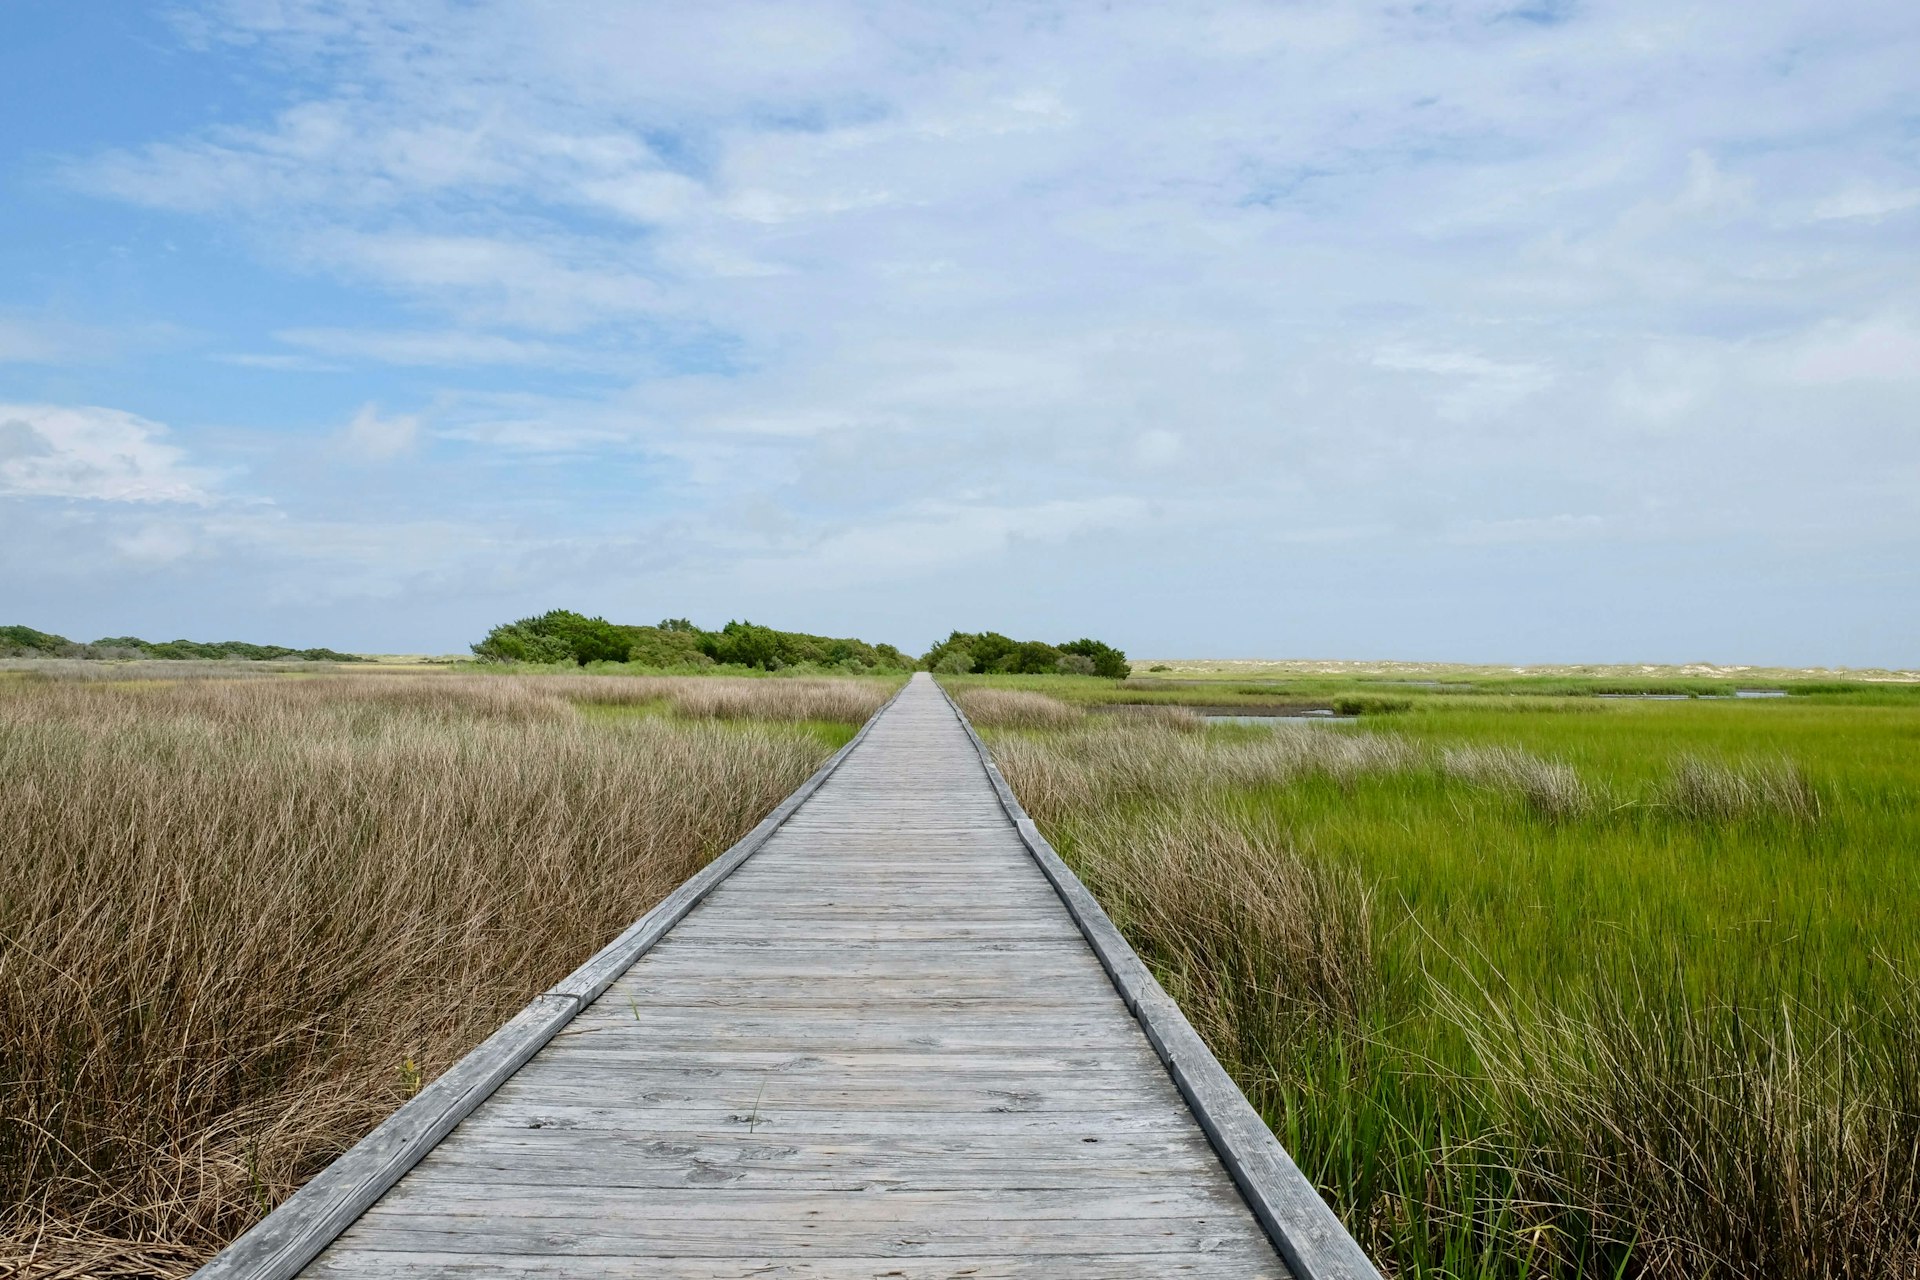 A long boardwalk through marshland disappearing into the horizon